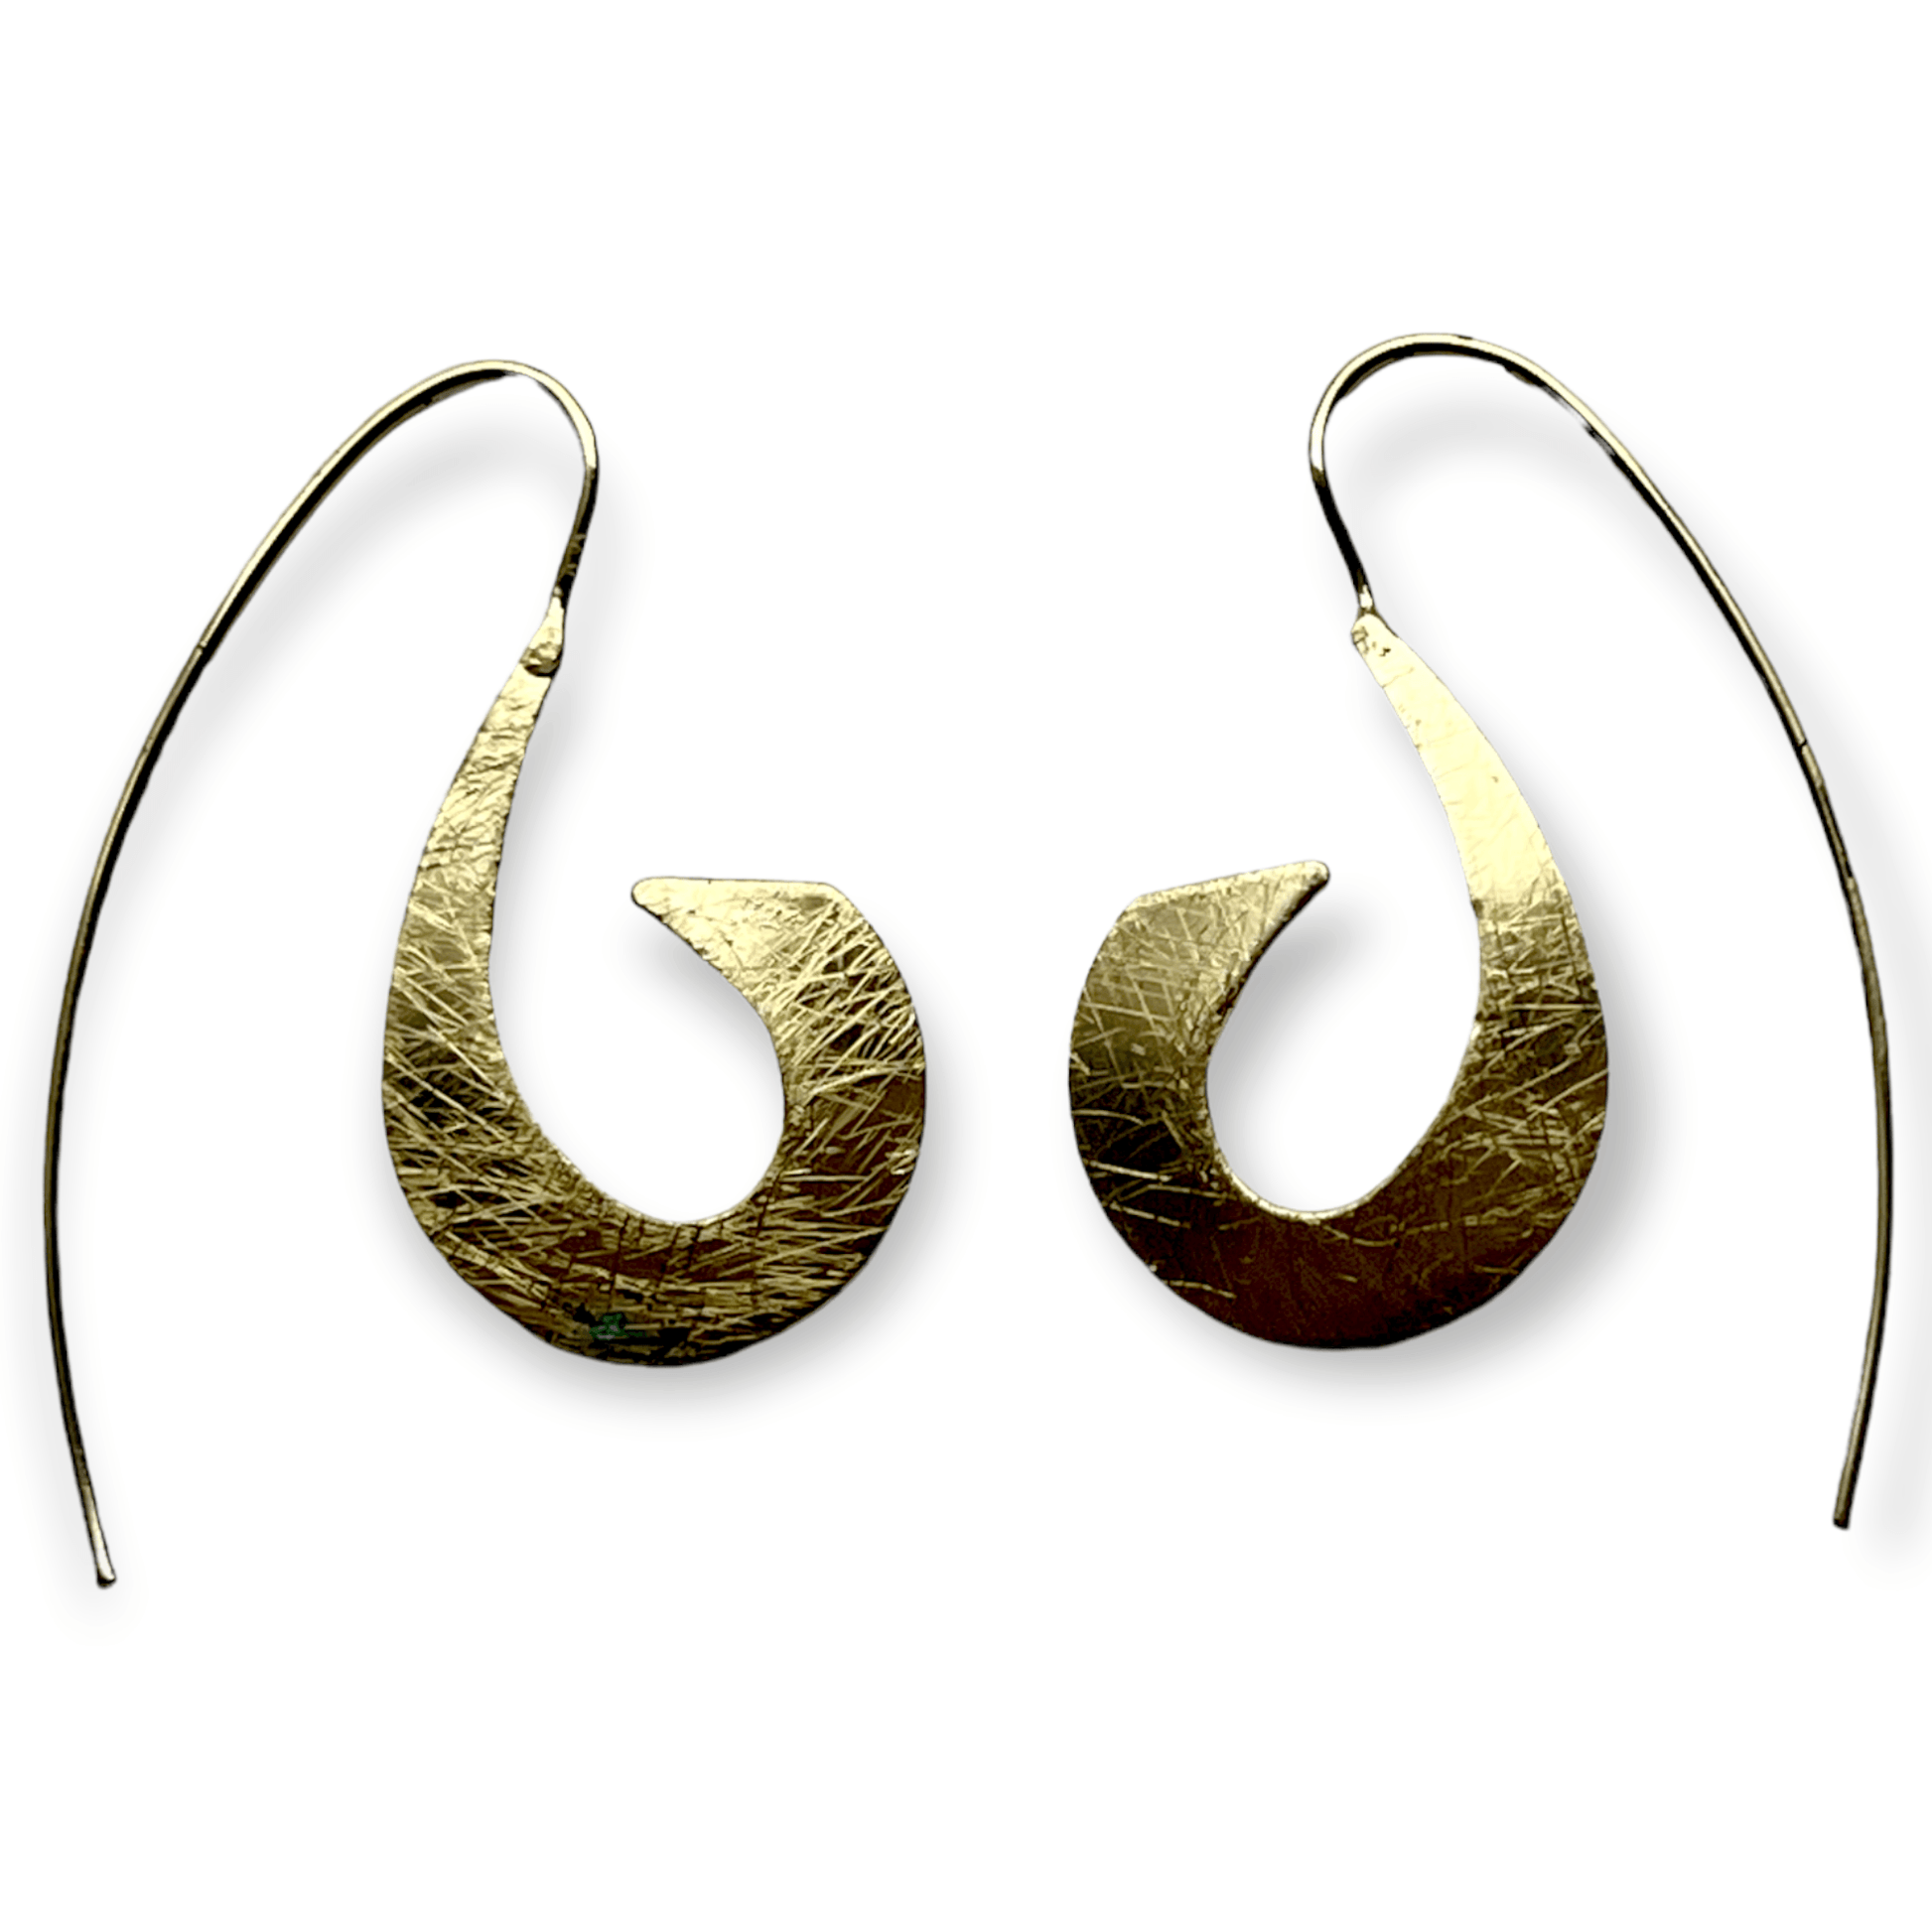 Brush metal drop earrings with a curl at the bottom - Sundara Joon